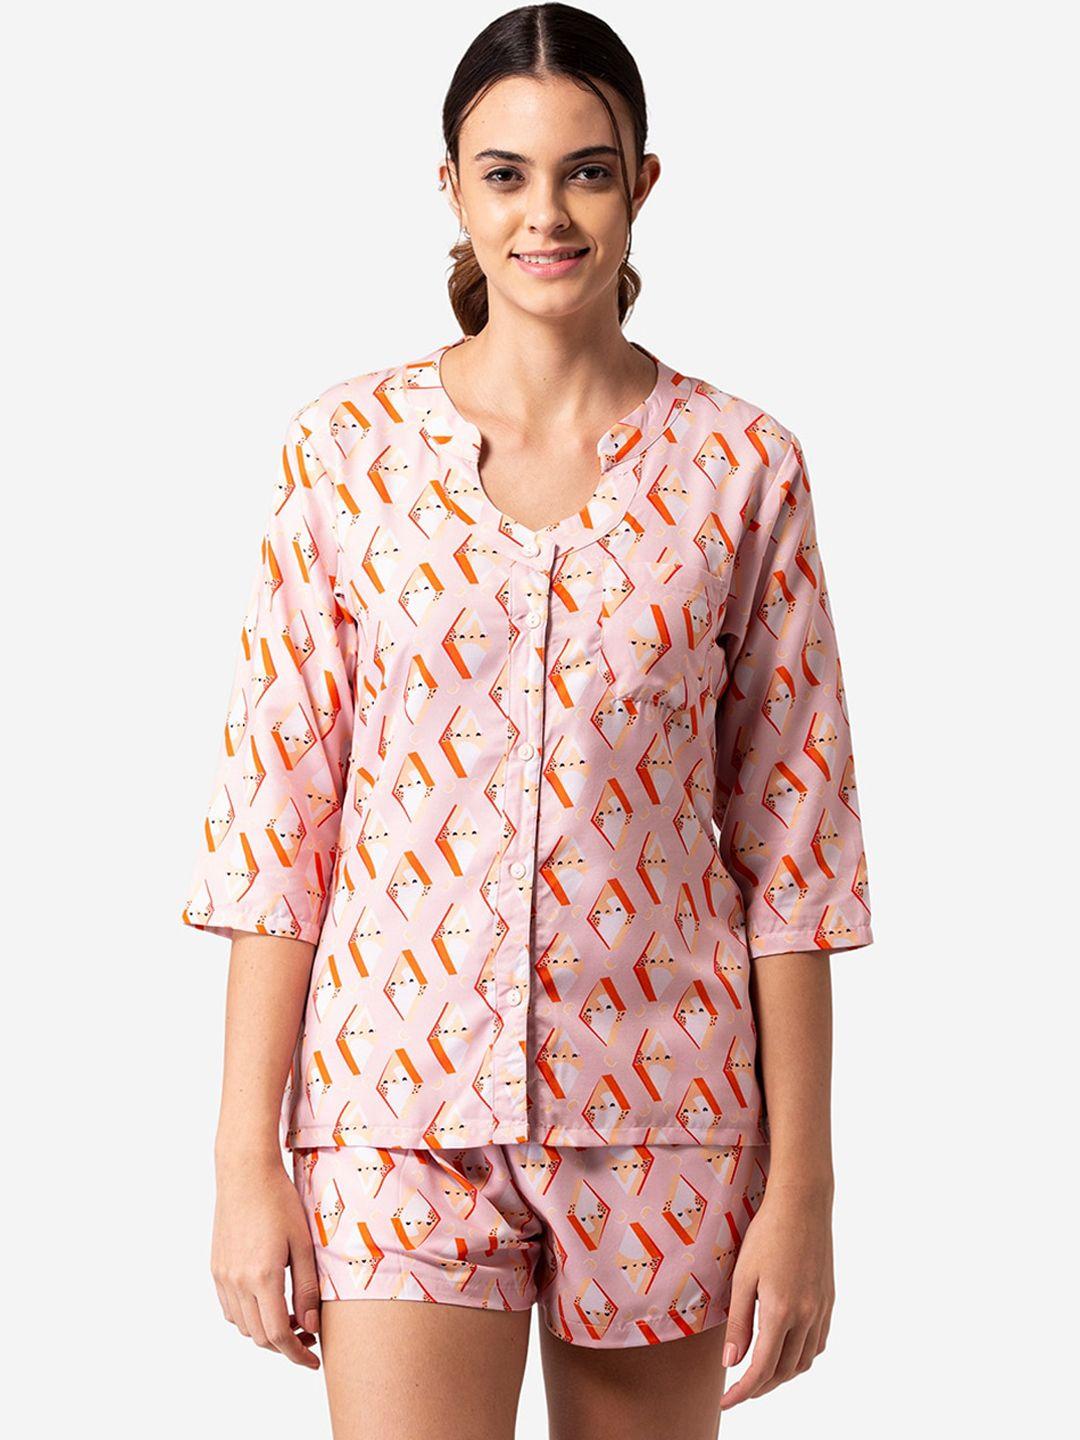 bellofox women peach-coloured & white printed night suit